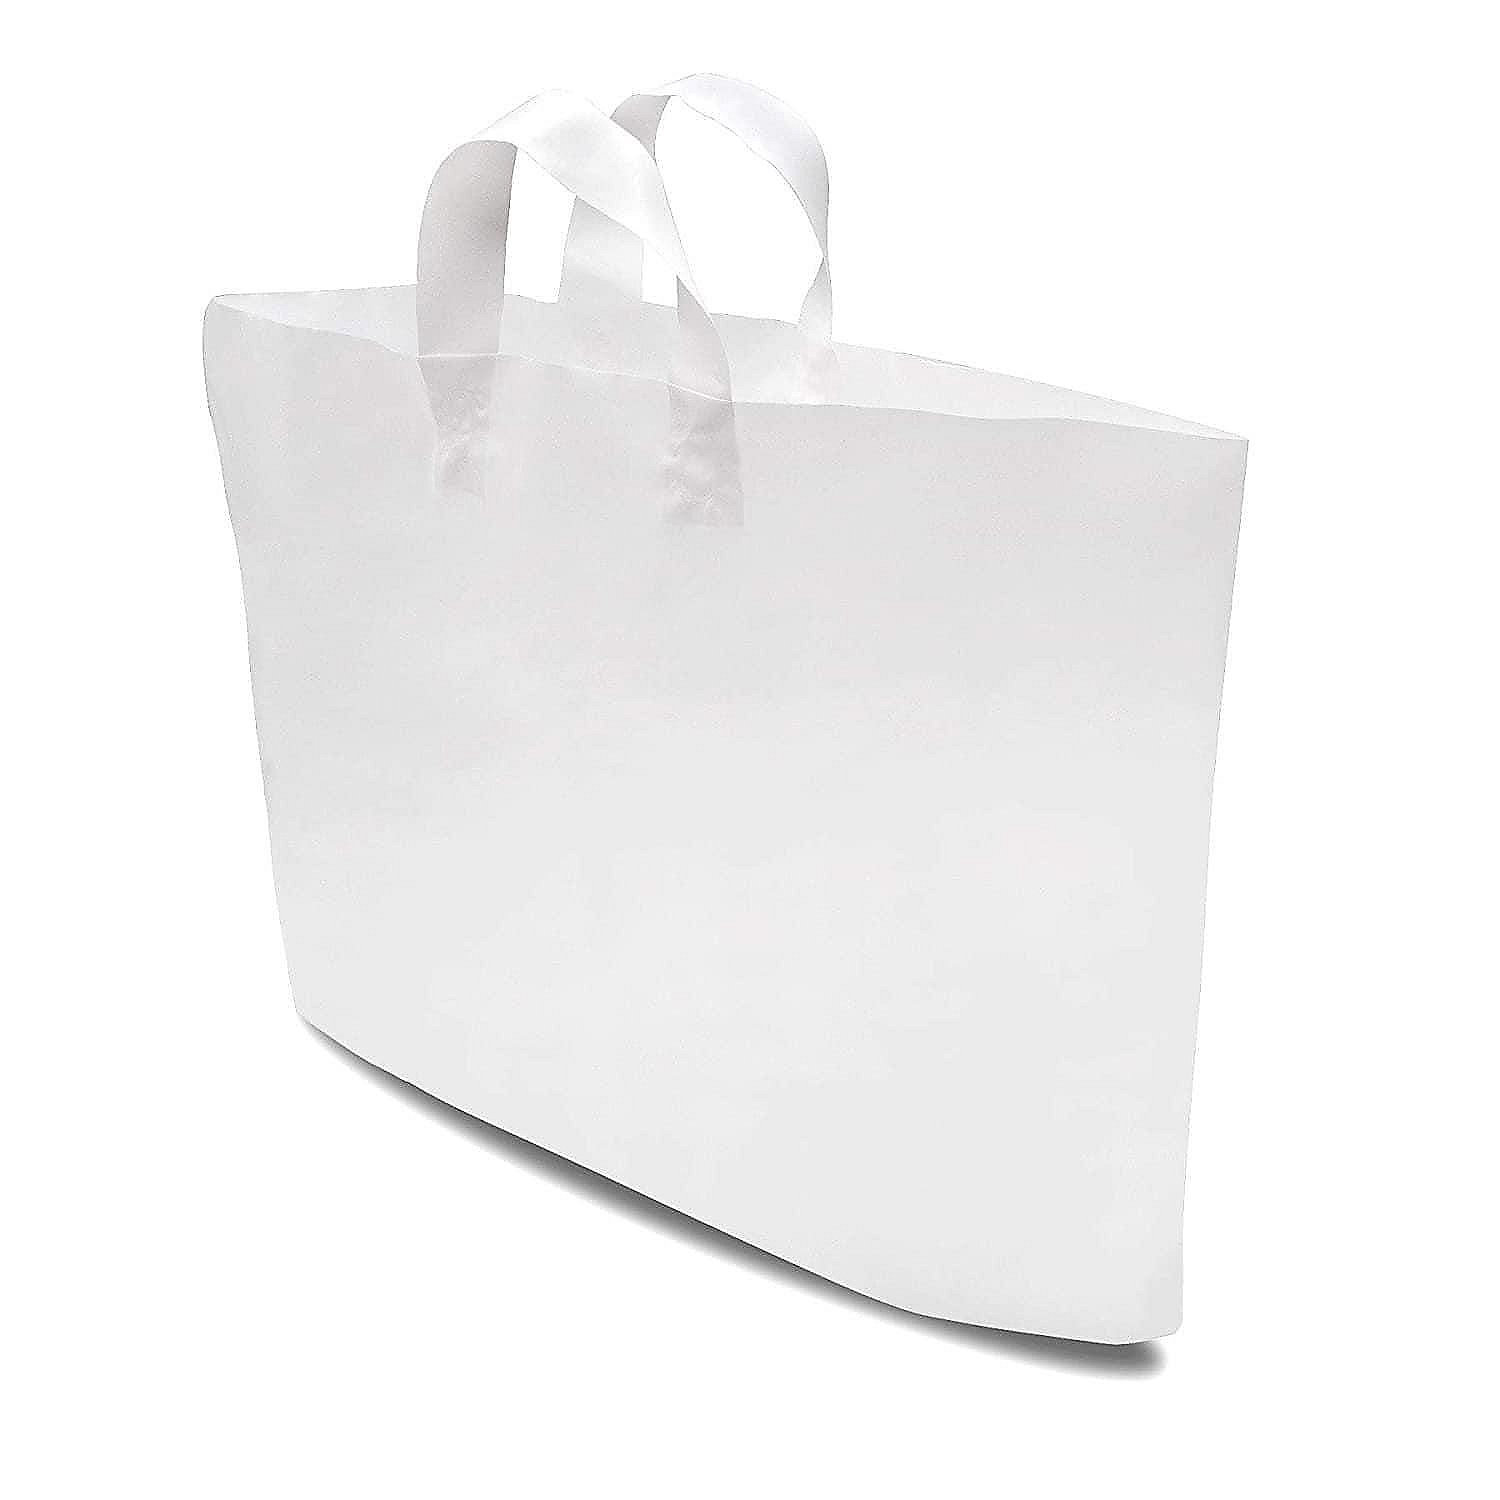 Prime Line Packaging Clear Plastic Bags with Soft Loop Handles